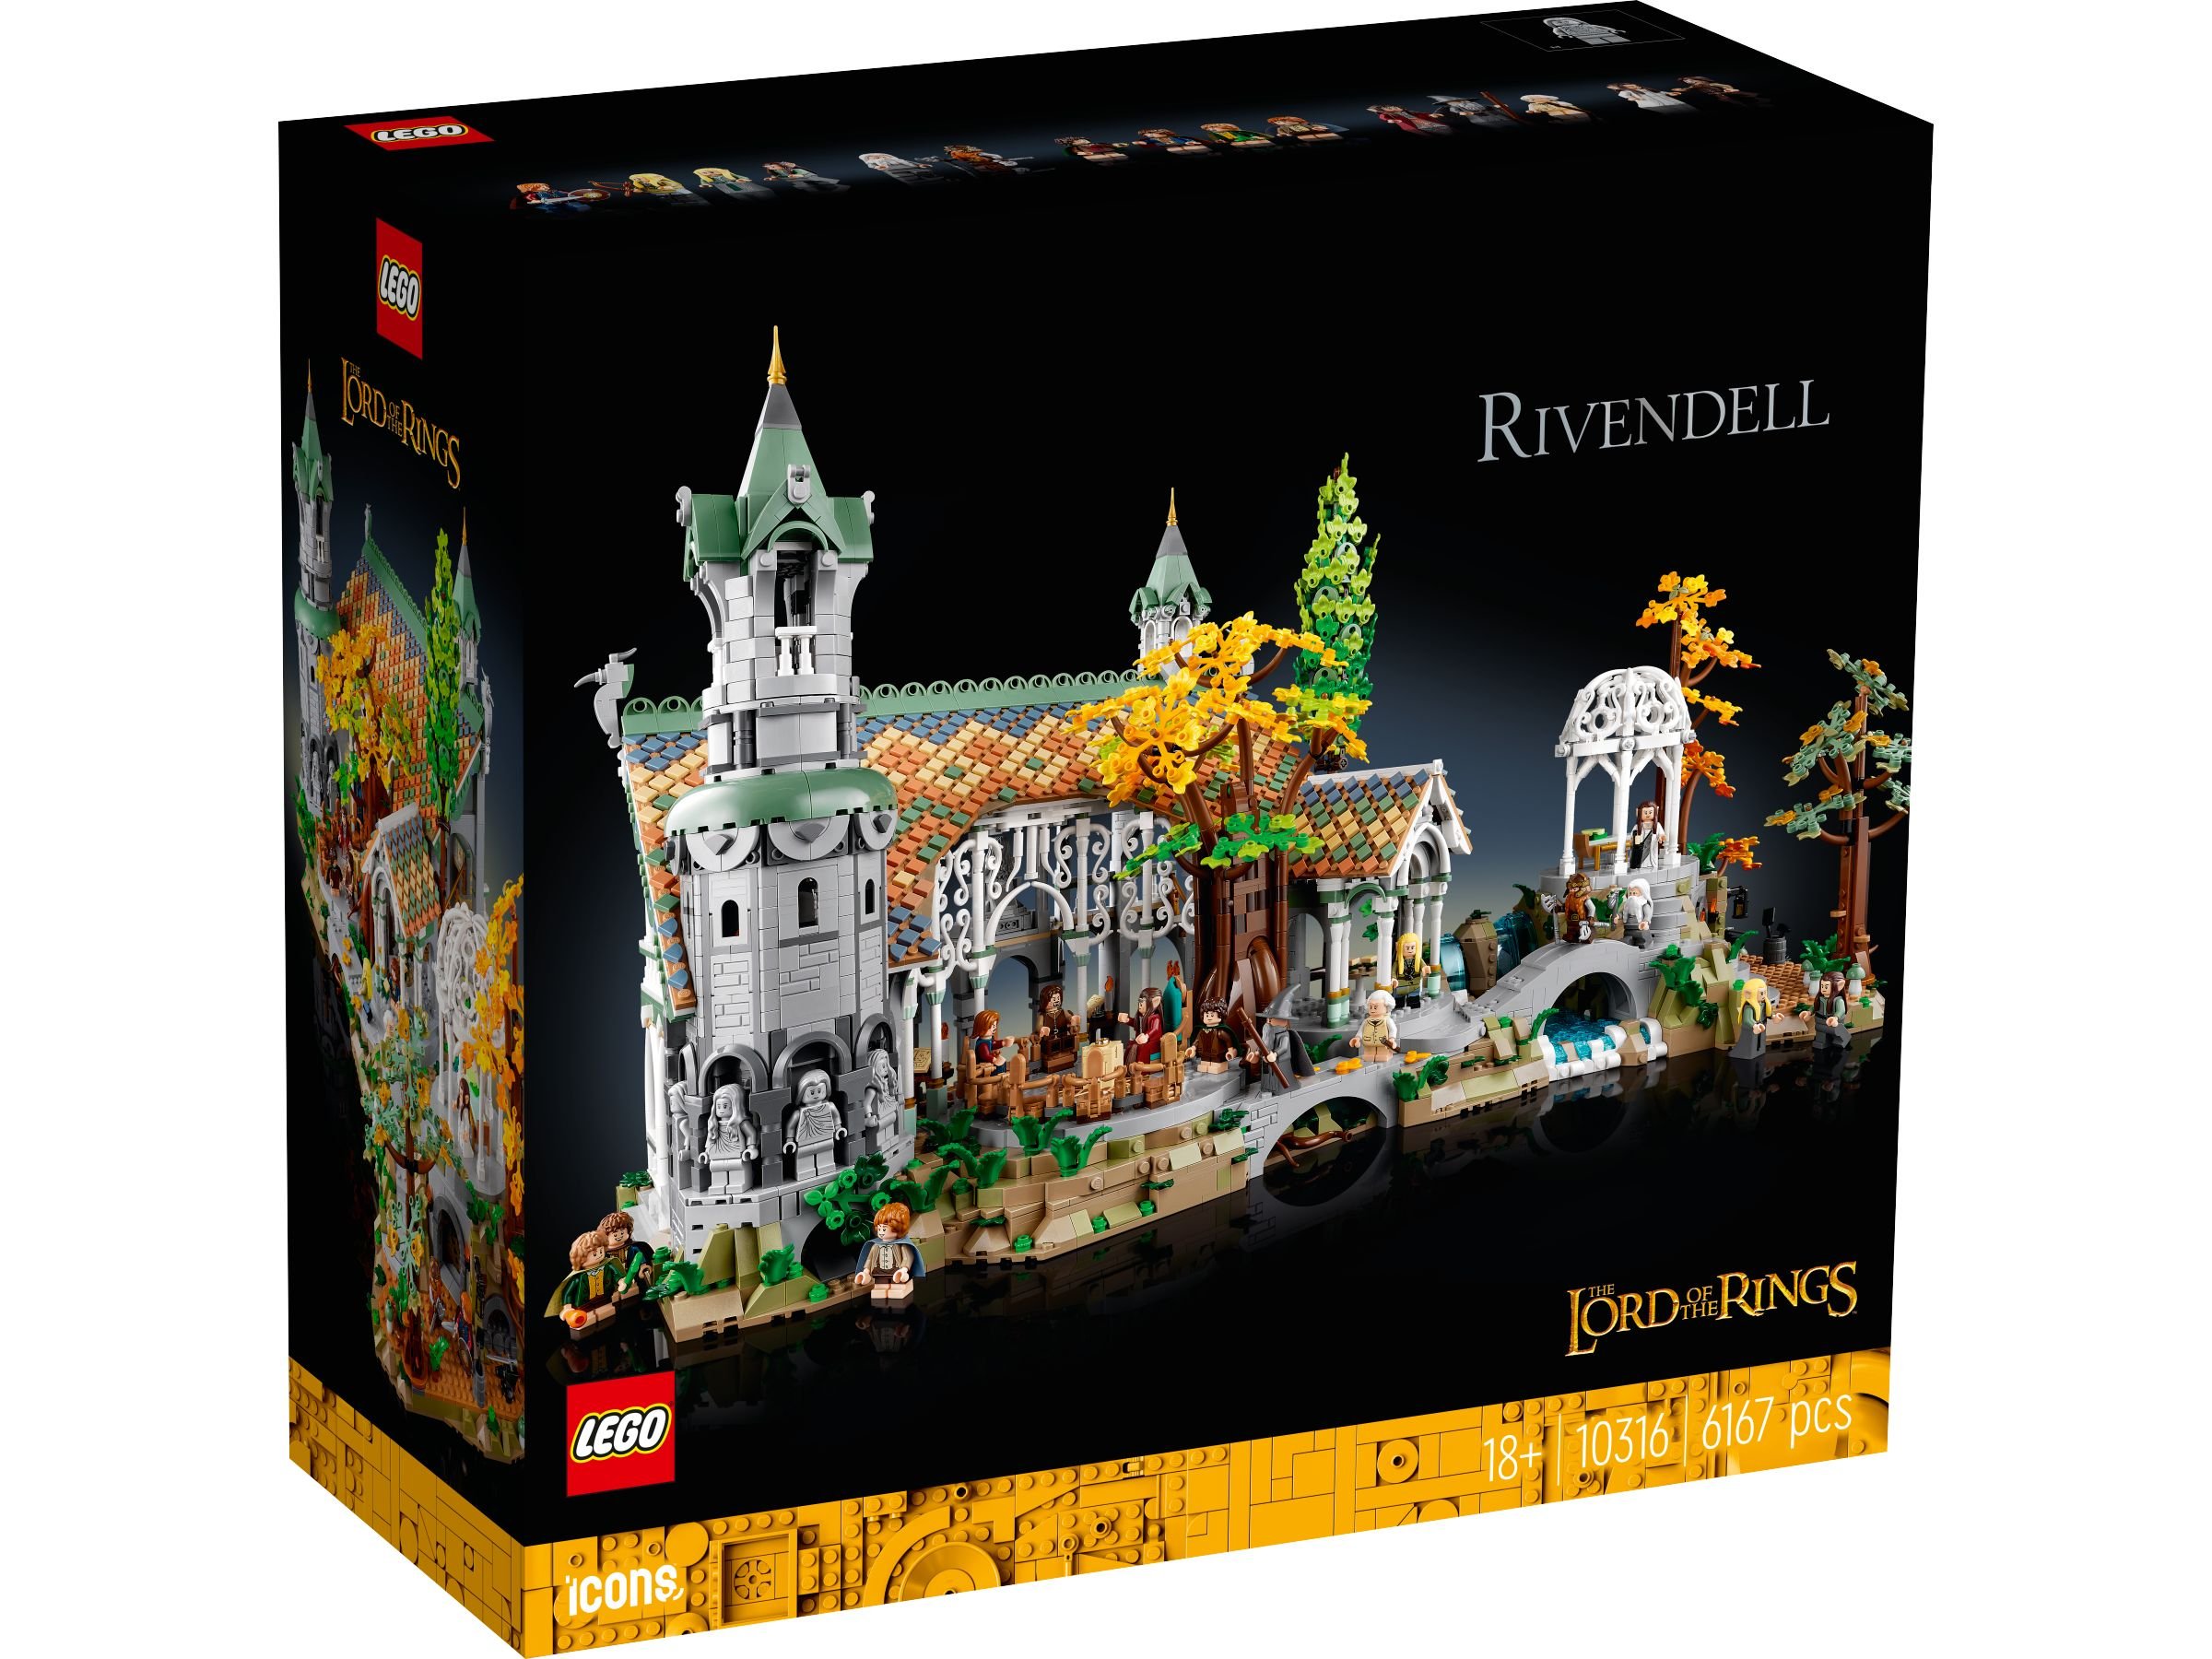 LEGO Advanced Models 10316 Herr der Ringe - Bruchtal LEGO_10316_Box1_v29.jpg